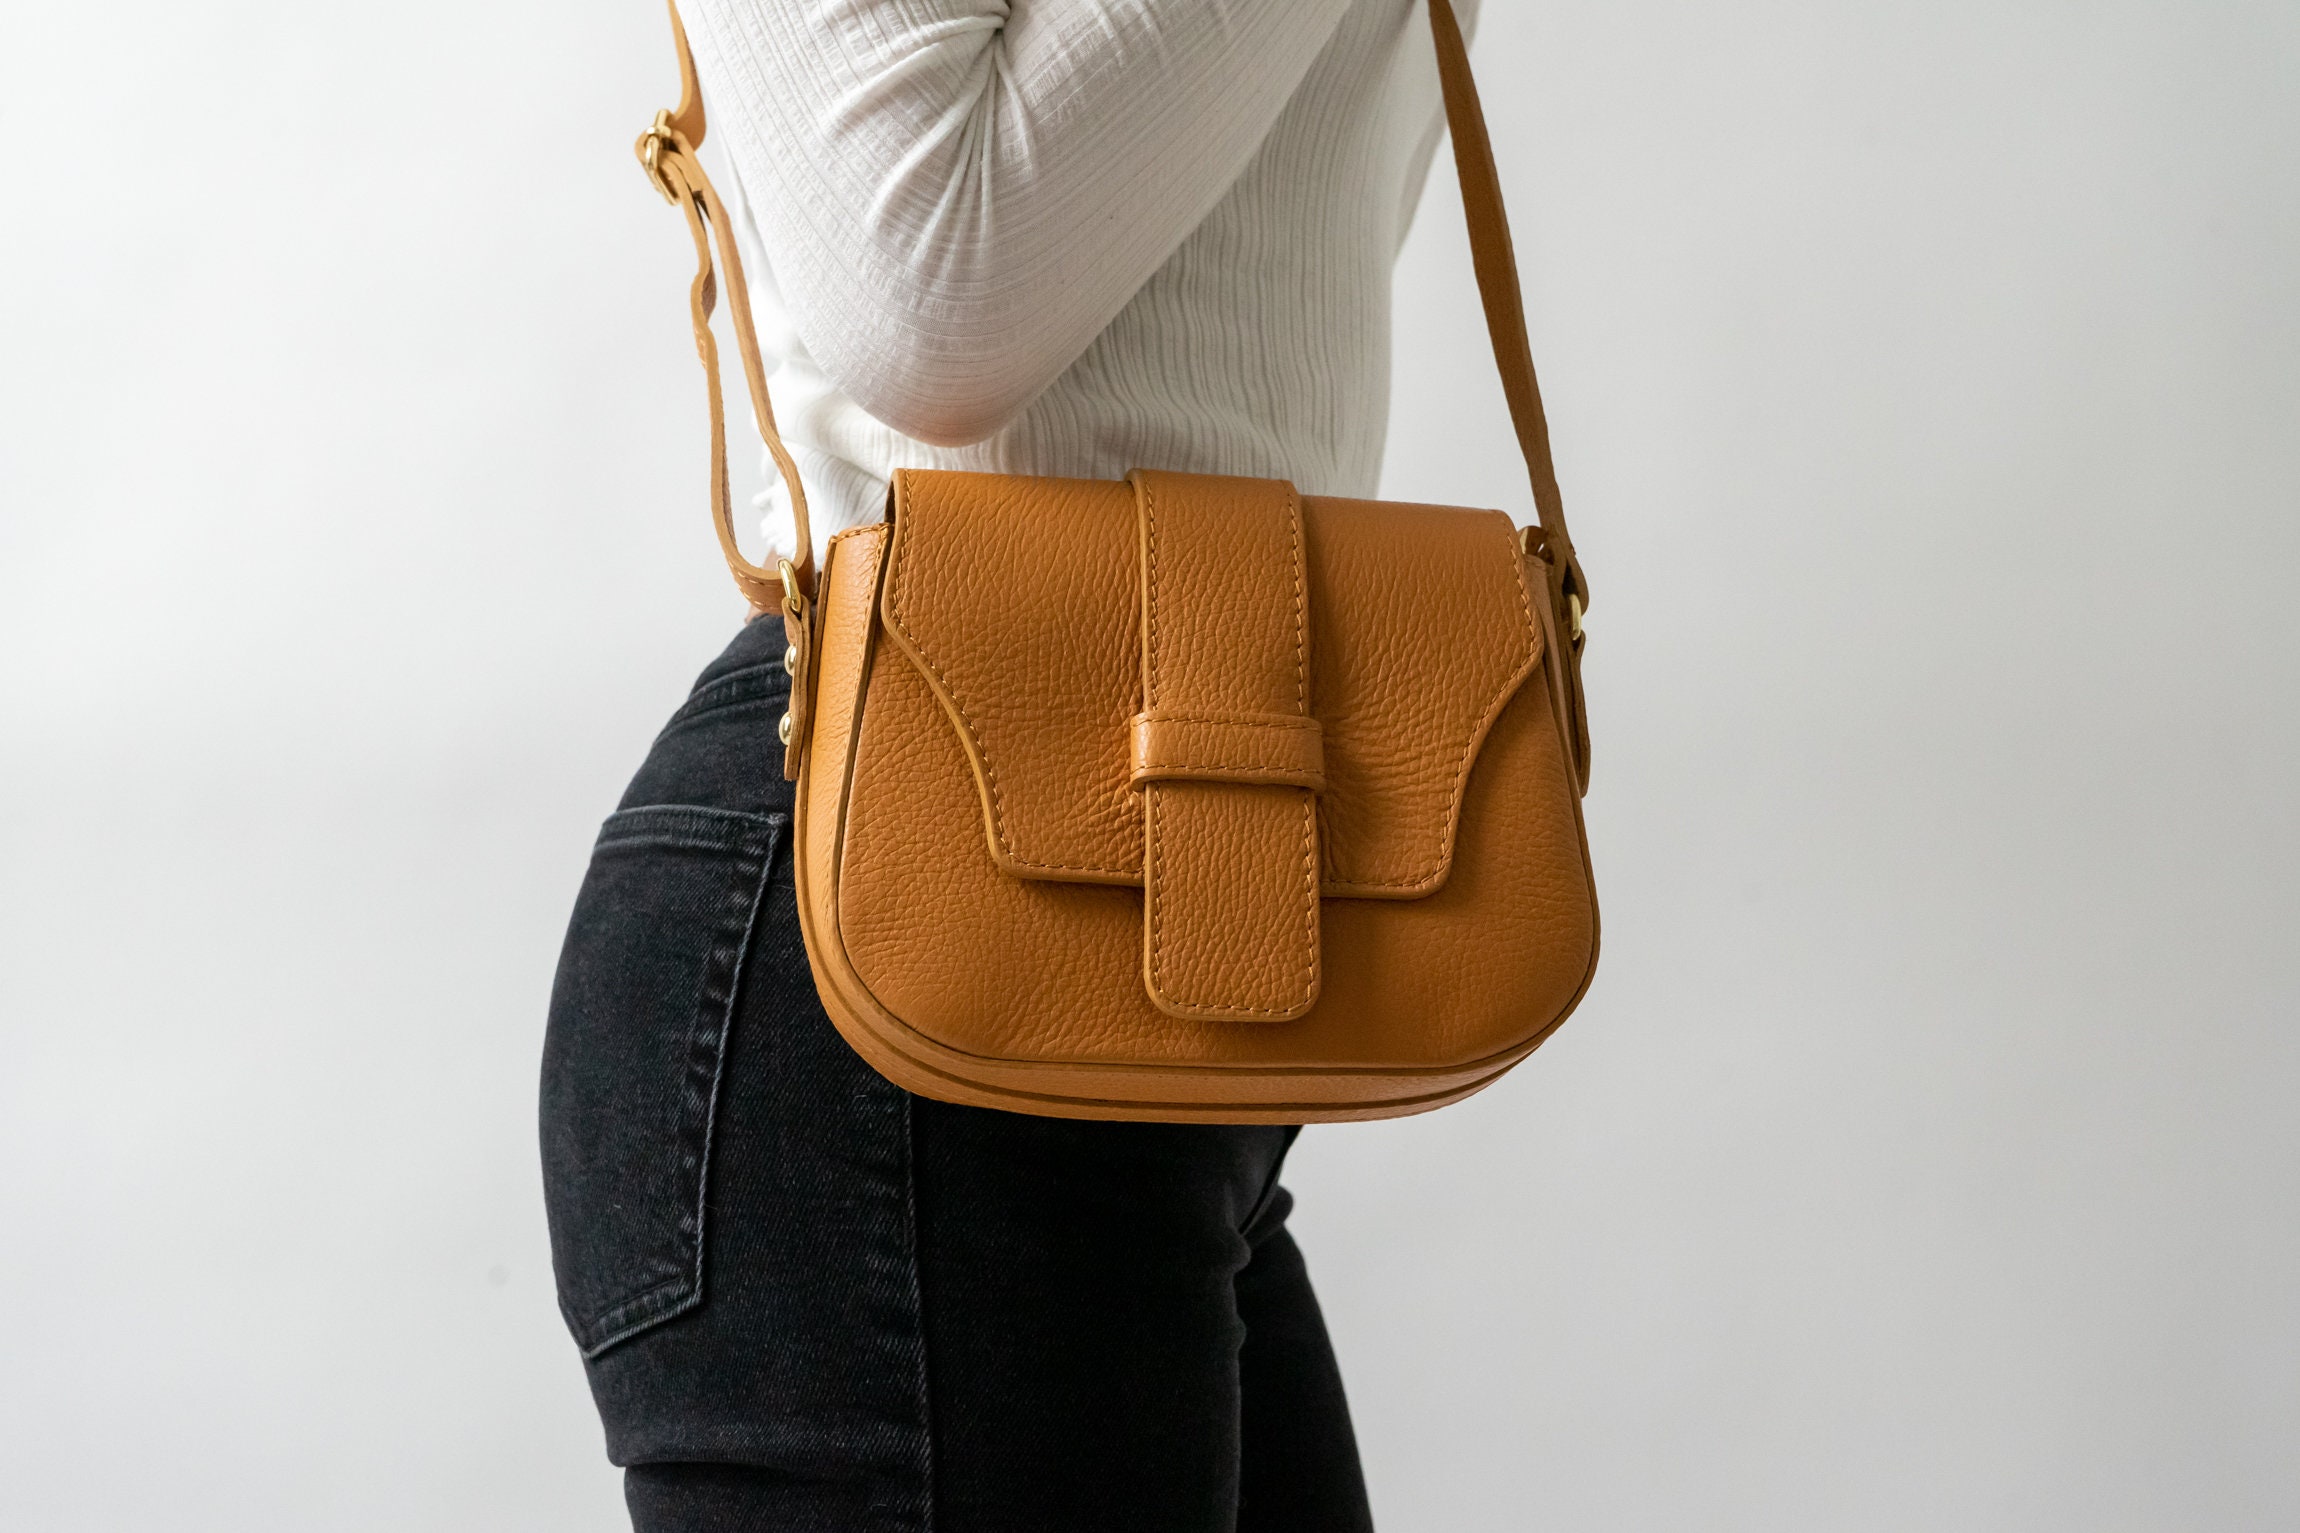 Calfnero Genuine Leather Women's Sling Bag (LV-01-Black) – www.